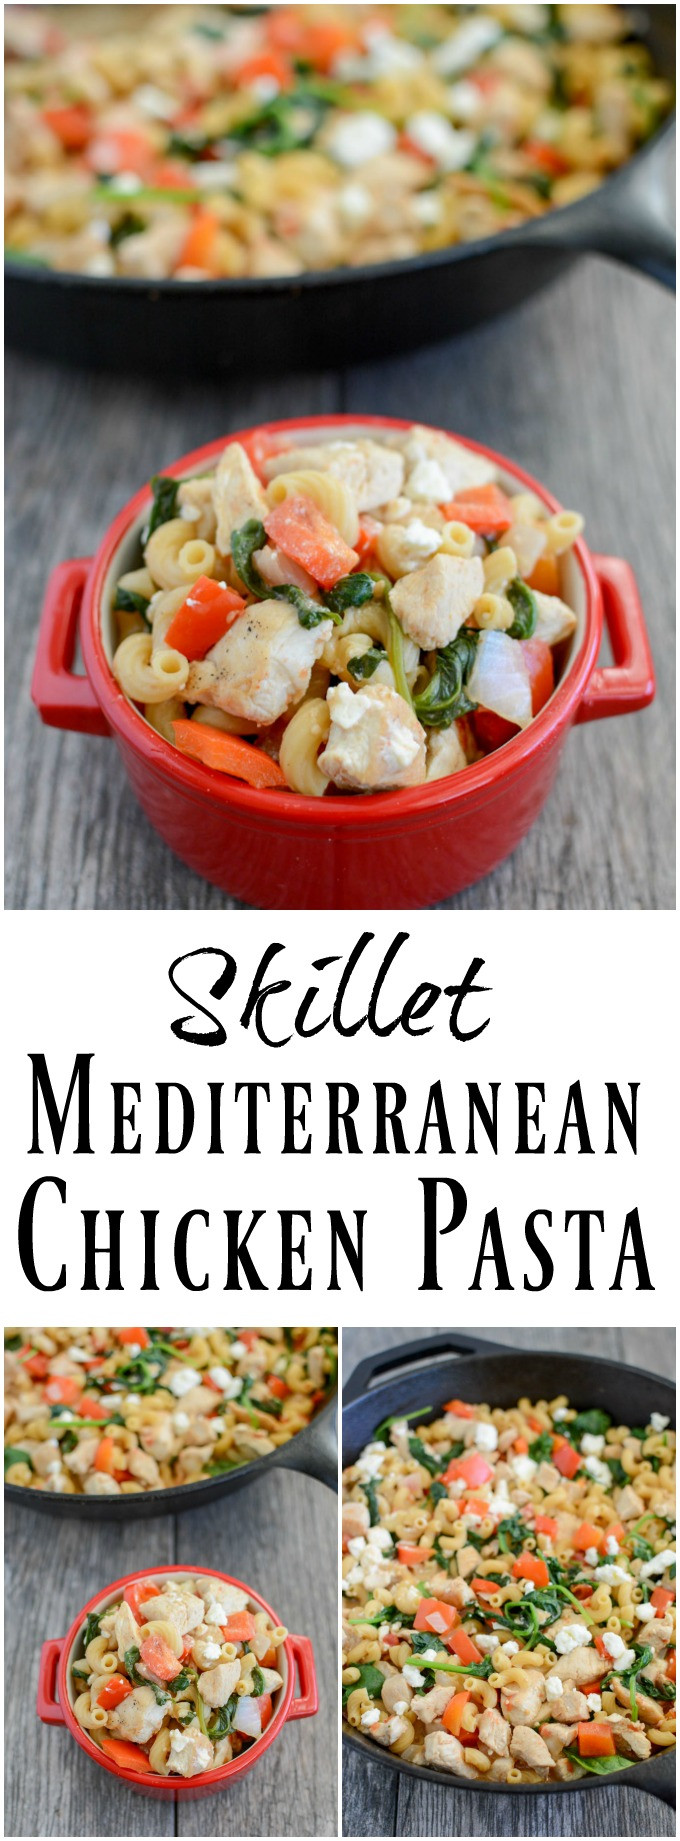 Mediterranean Dinner Recipes
 Skillet Mediterranean Chicken Pasta